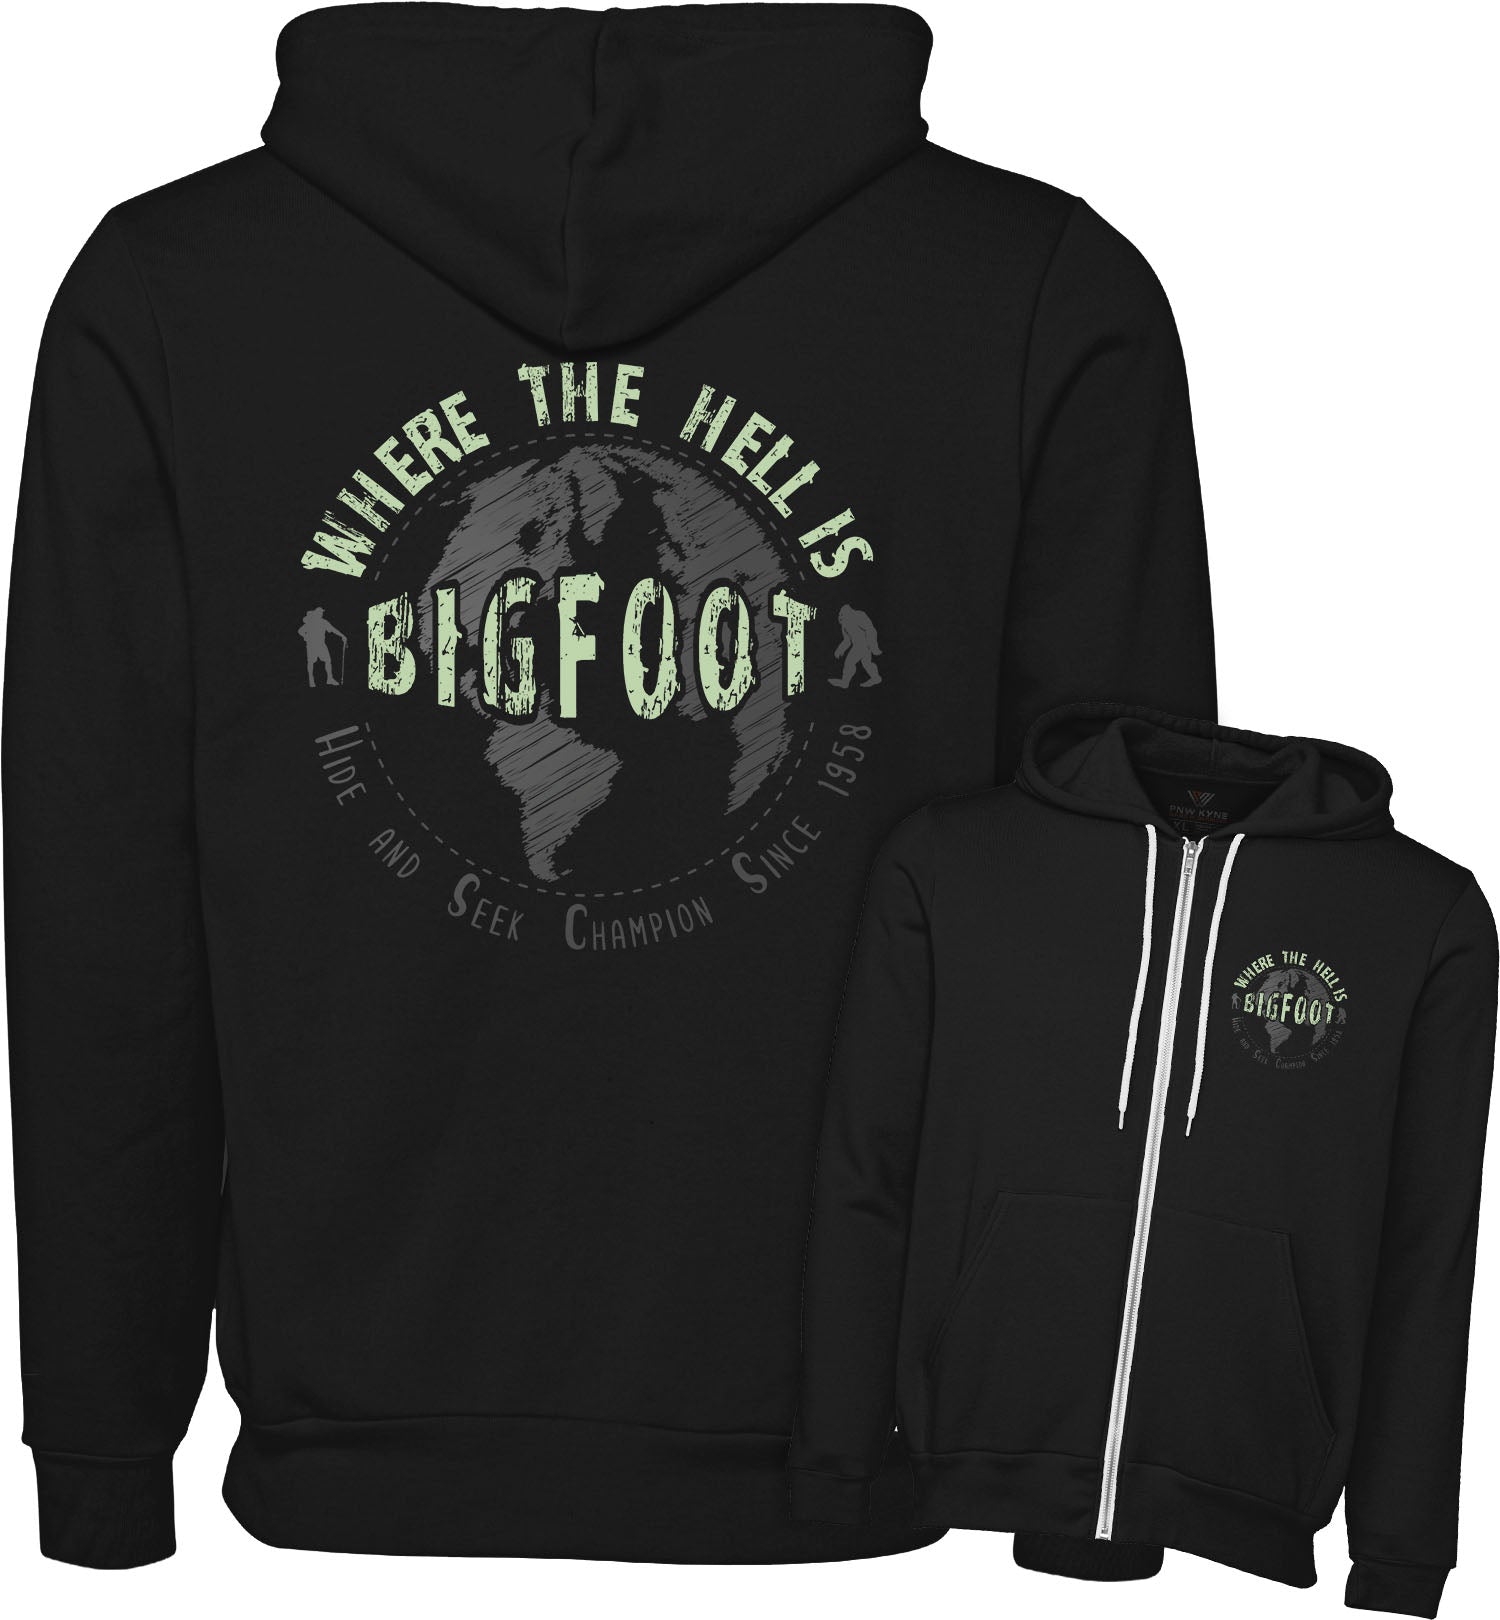 Bigfoot Sweatshirt - Hide and Seek Champion - Zip Hoodie - Combined - Black